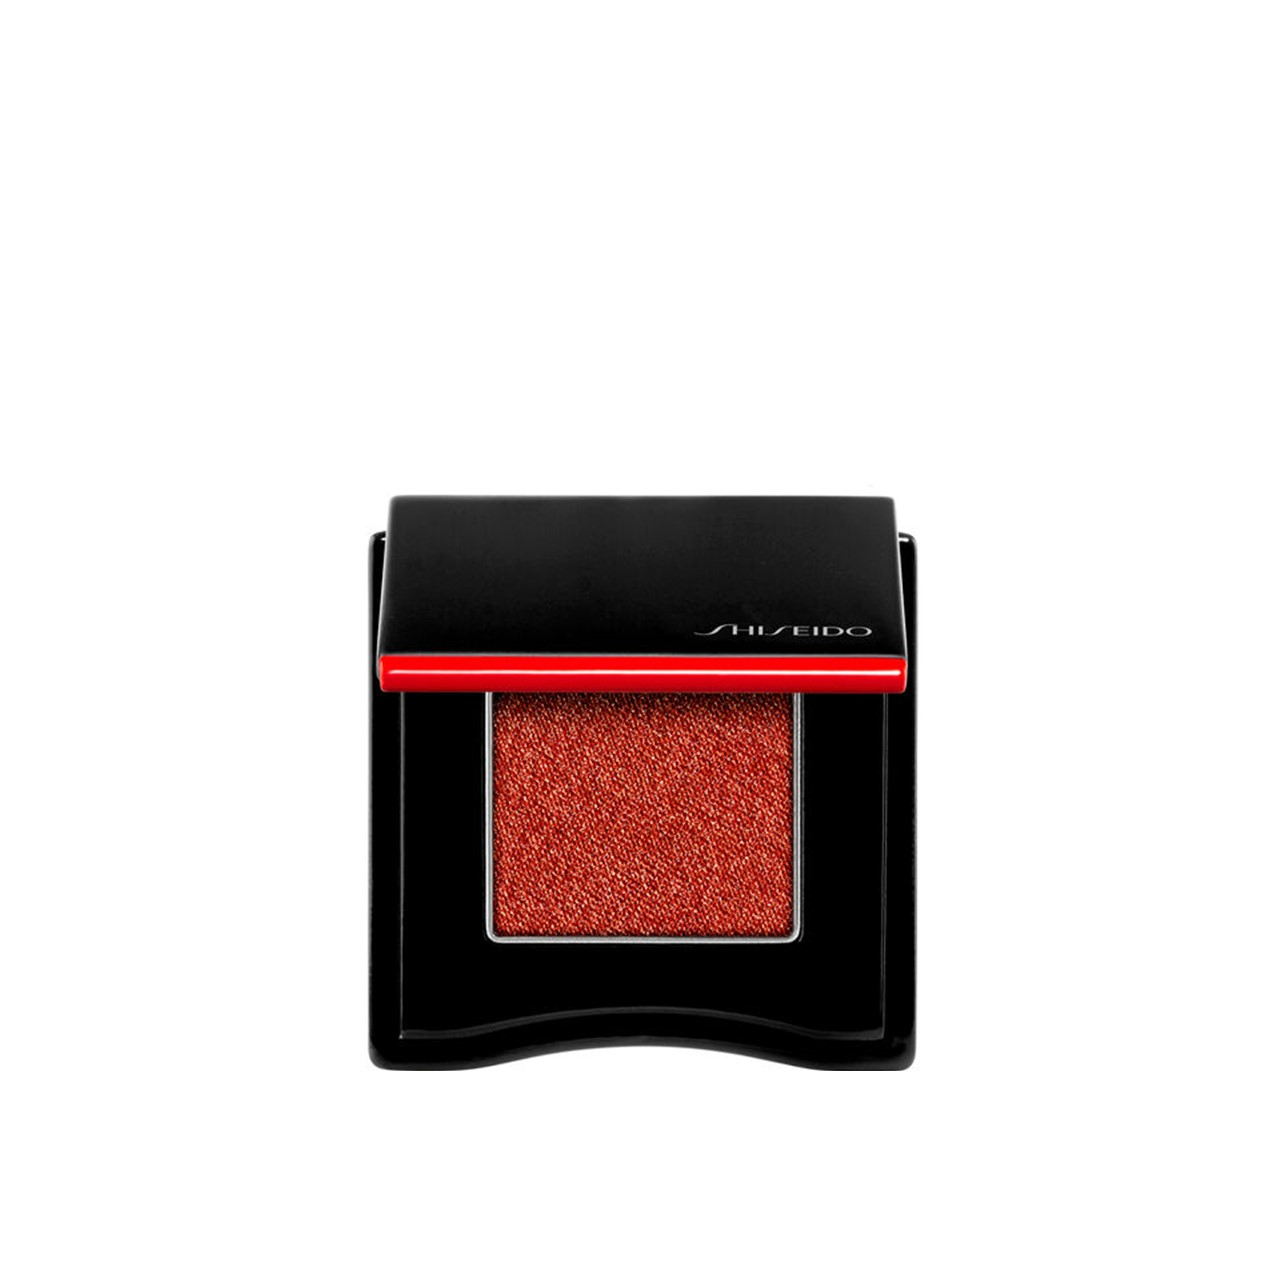 Shiseido POP PowderGel Eye Shadow 06 Vivivi Orange 2.2g (0.08oz)